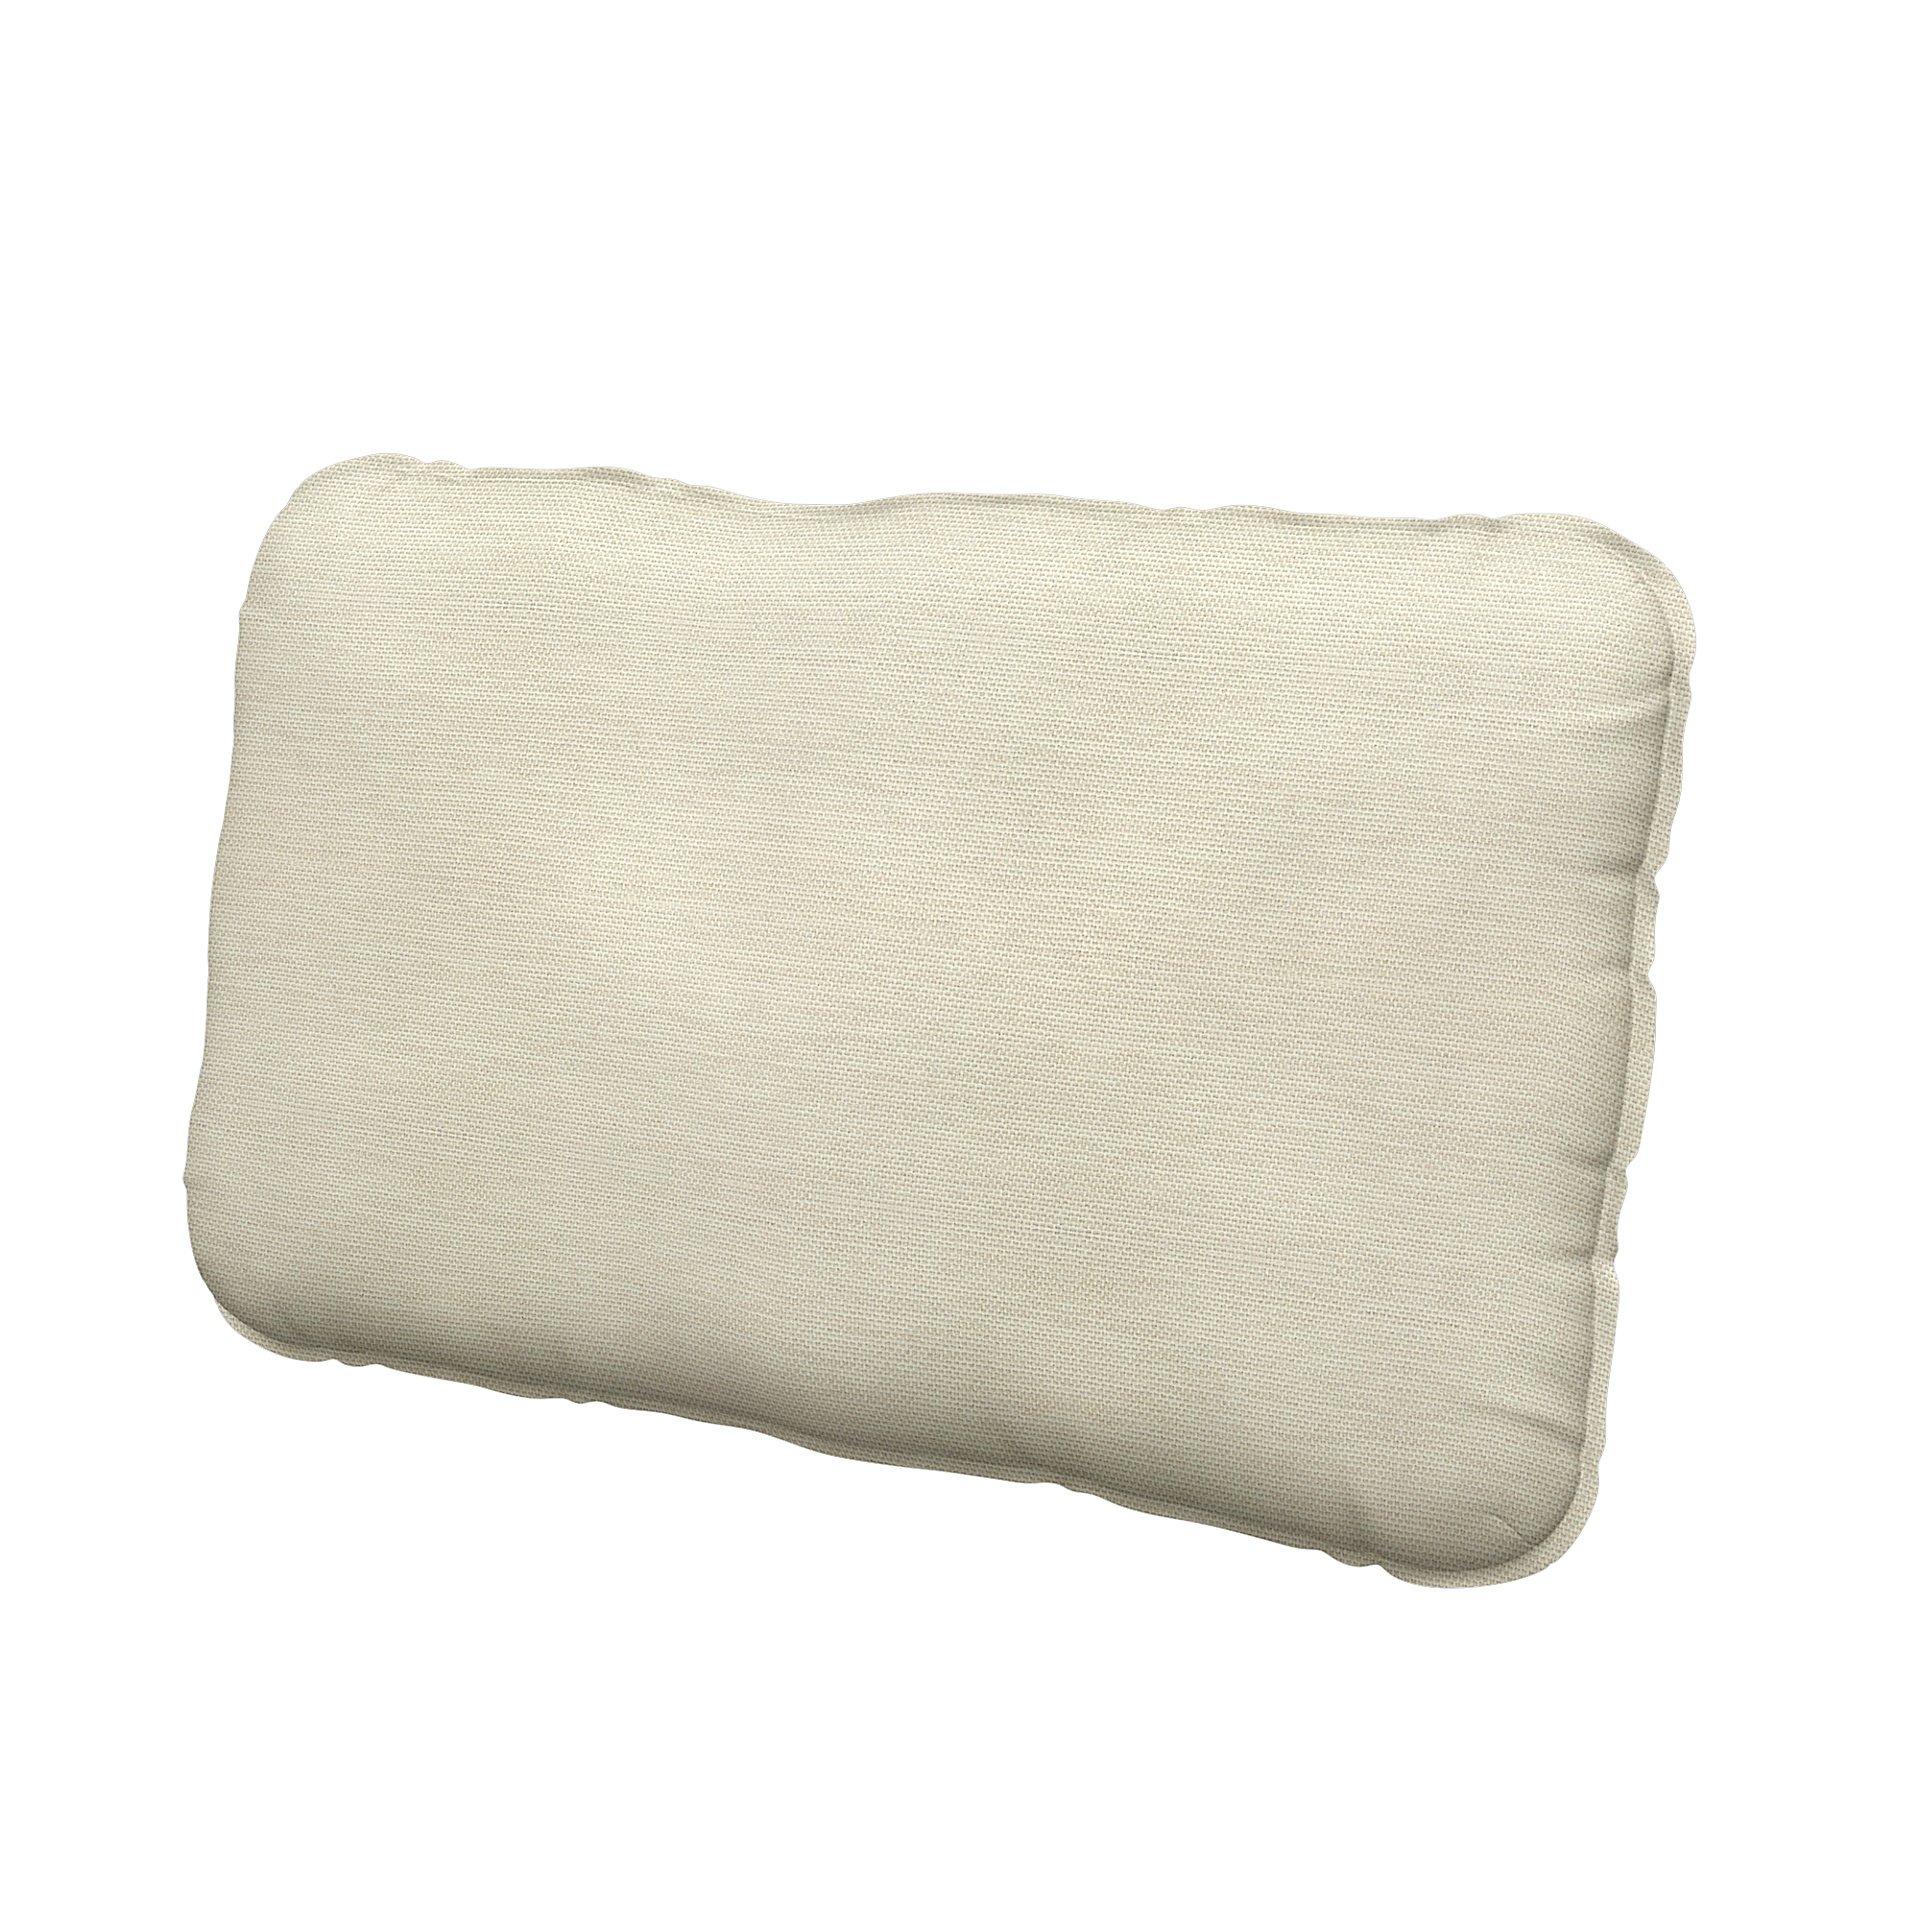 IKEA - Vallentuna back cushion cover 40x75cm, Sand Beige, Cotton - Bemz